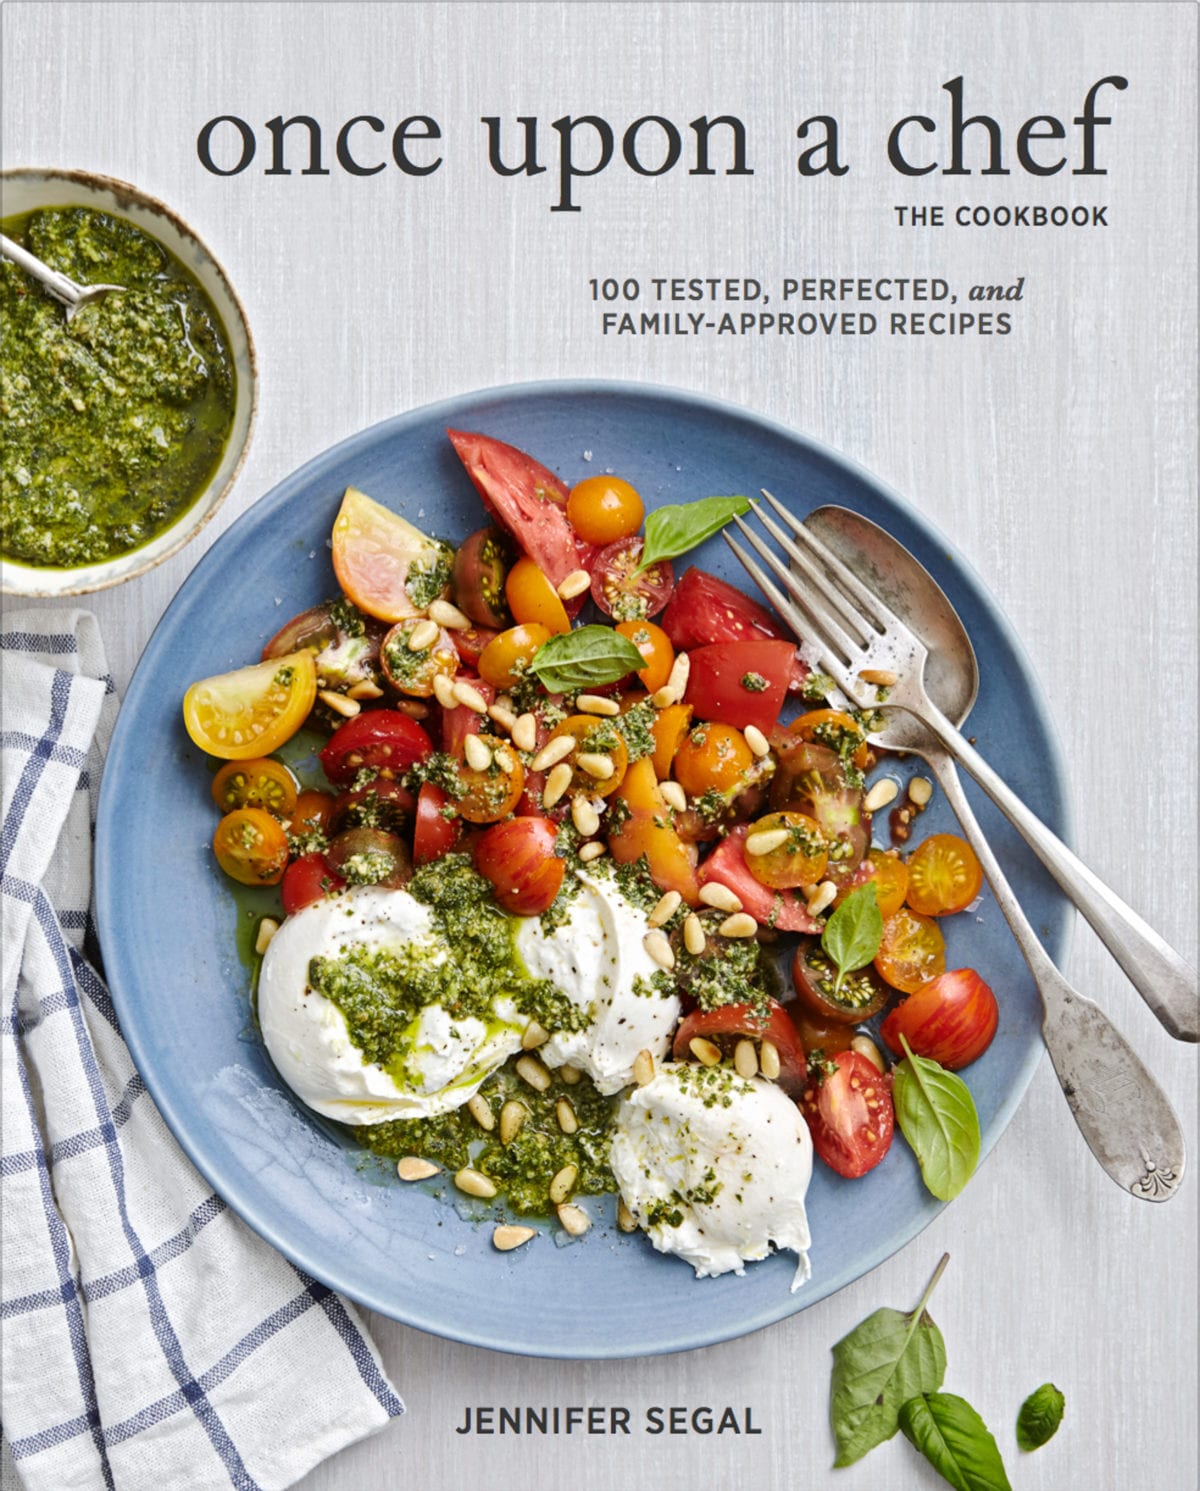 https://www.onceuponachef.com/images/2017/10/cookbook-cover-1200x1491.jpg